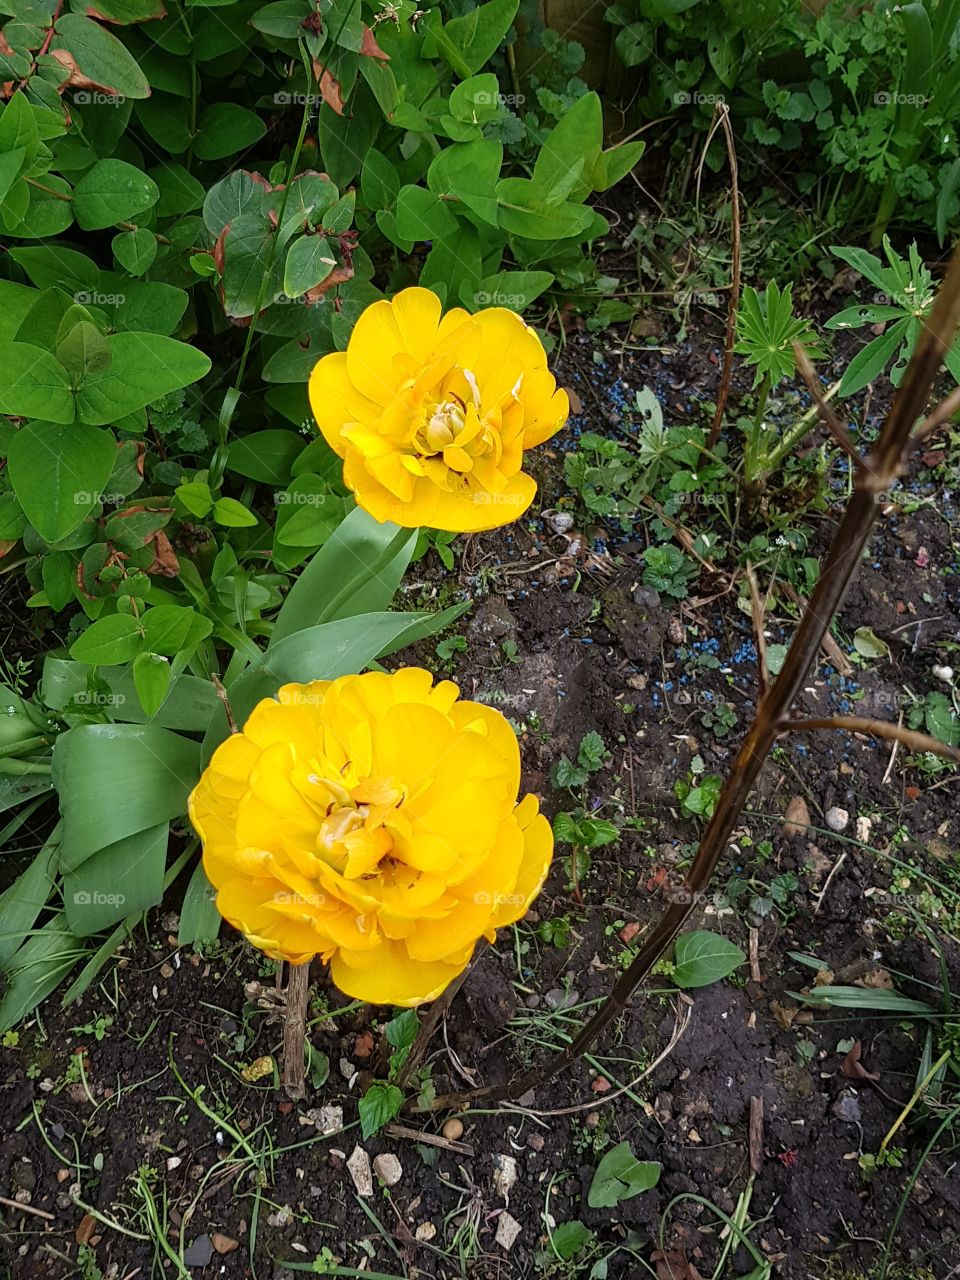 flowers in my garden